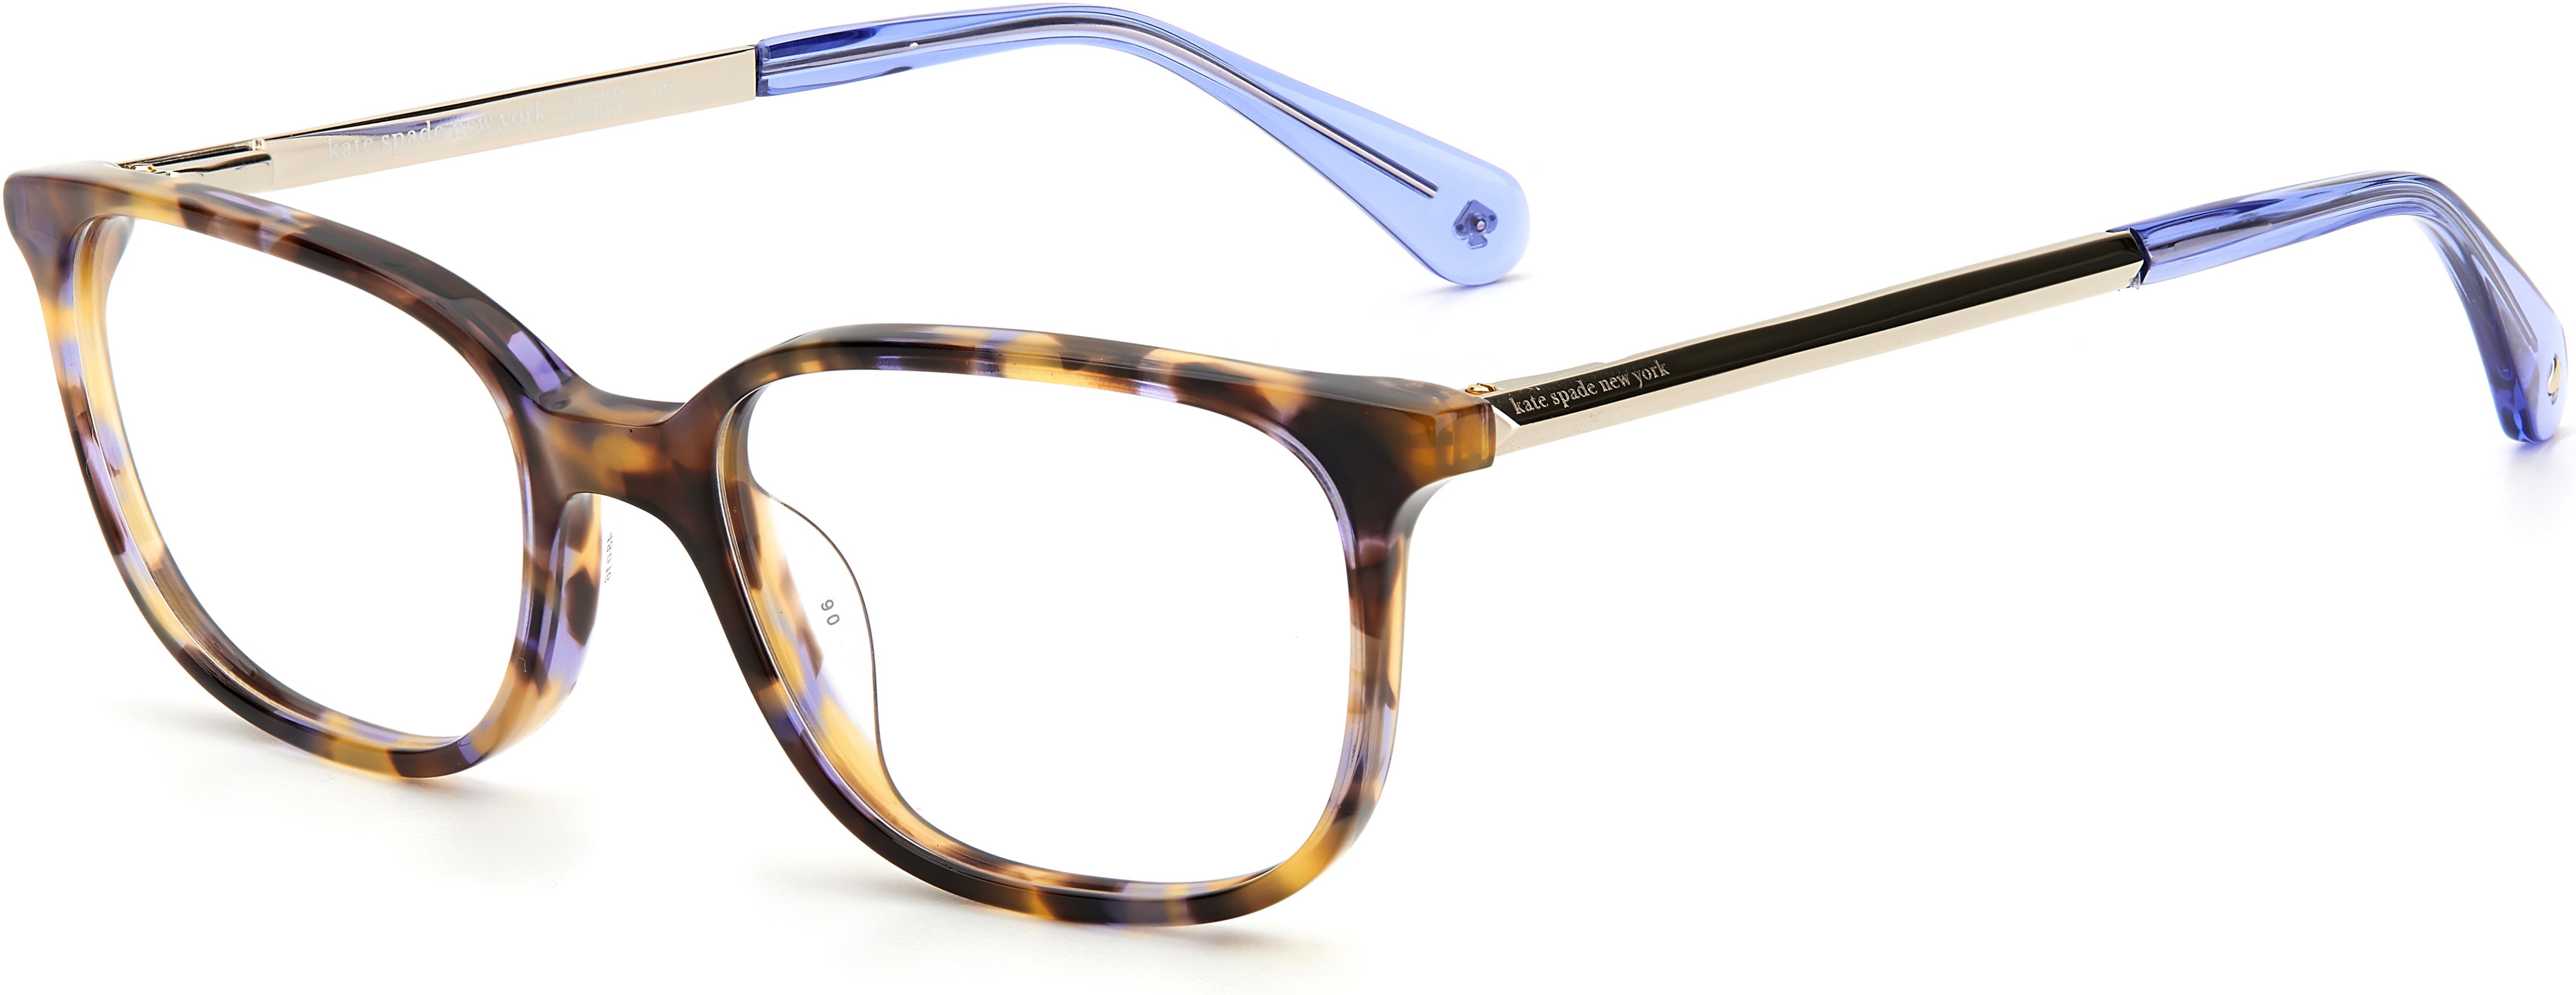 Kate Spade Natalia Rectangular Eyeglasses 0XP8-0XP8  Bl Havana Blue (00 Demo Lens)